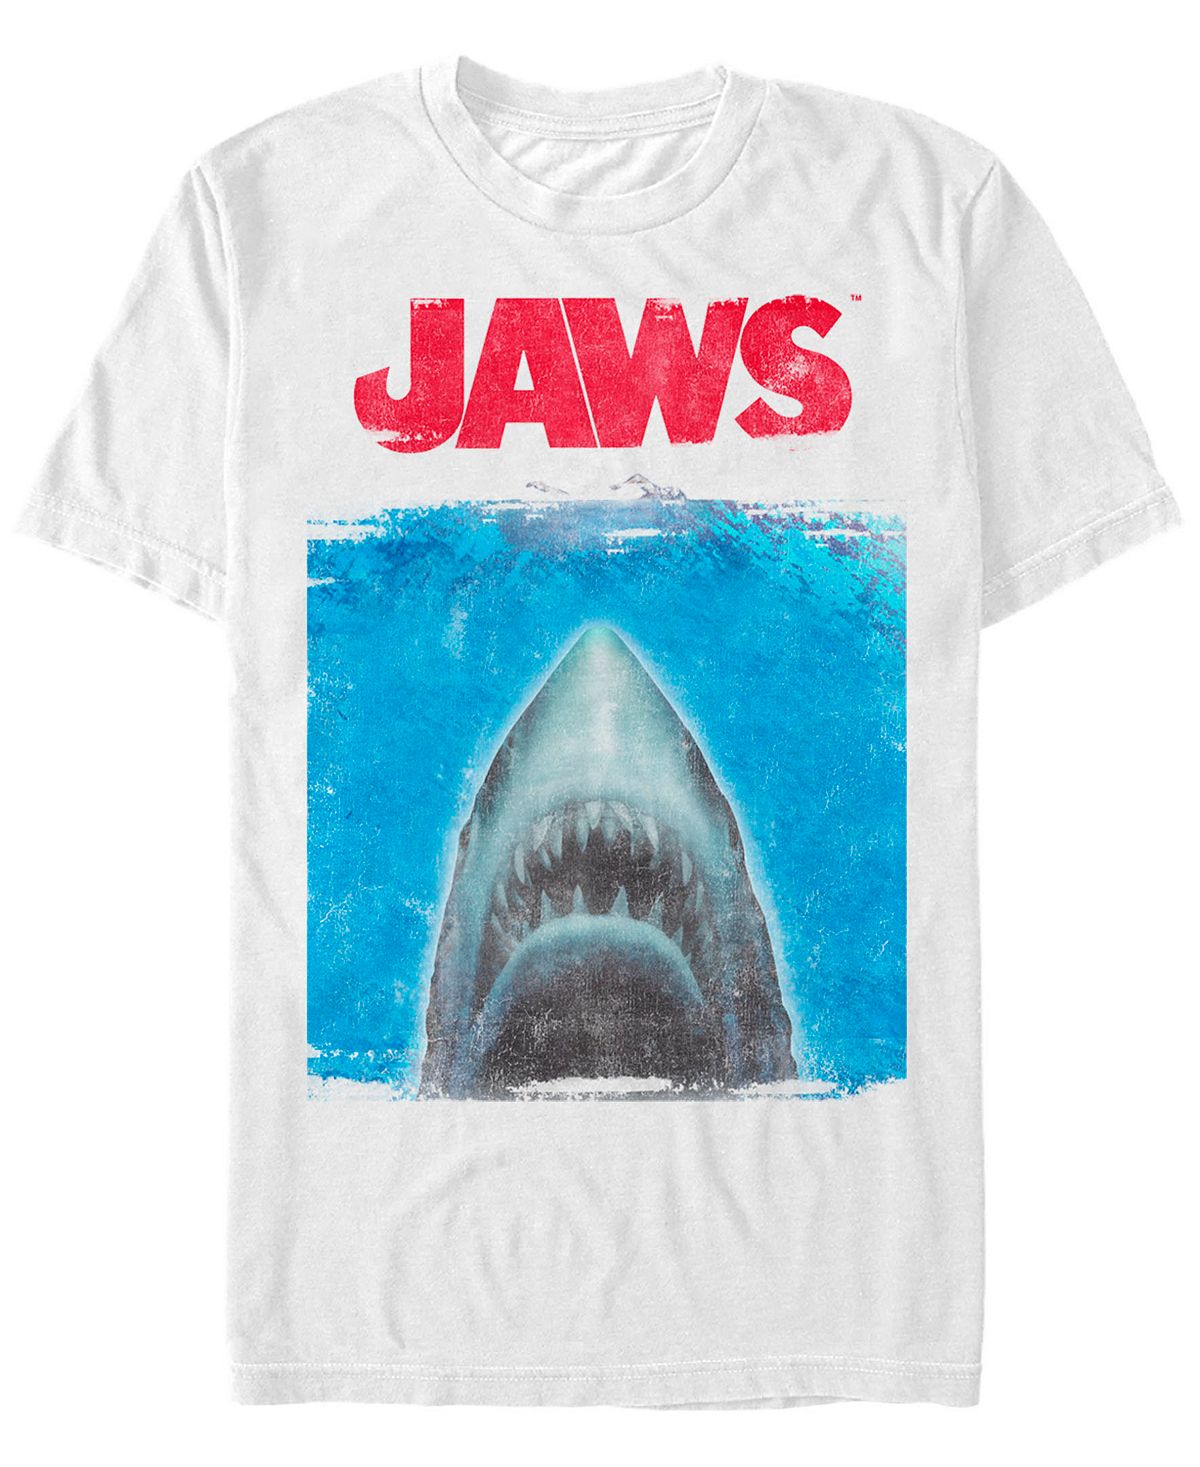 Мужская футболка с короткими рукавами с изображением акулы «челюсти» Fifth Sun, белый borat cool 21st century comedy classic movie poster fan t shirt